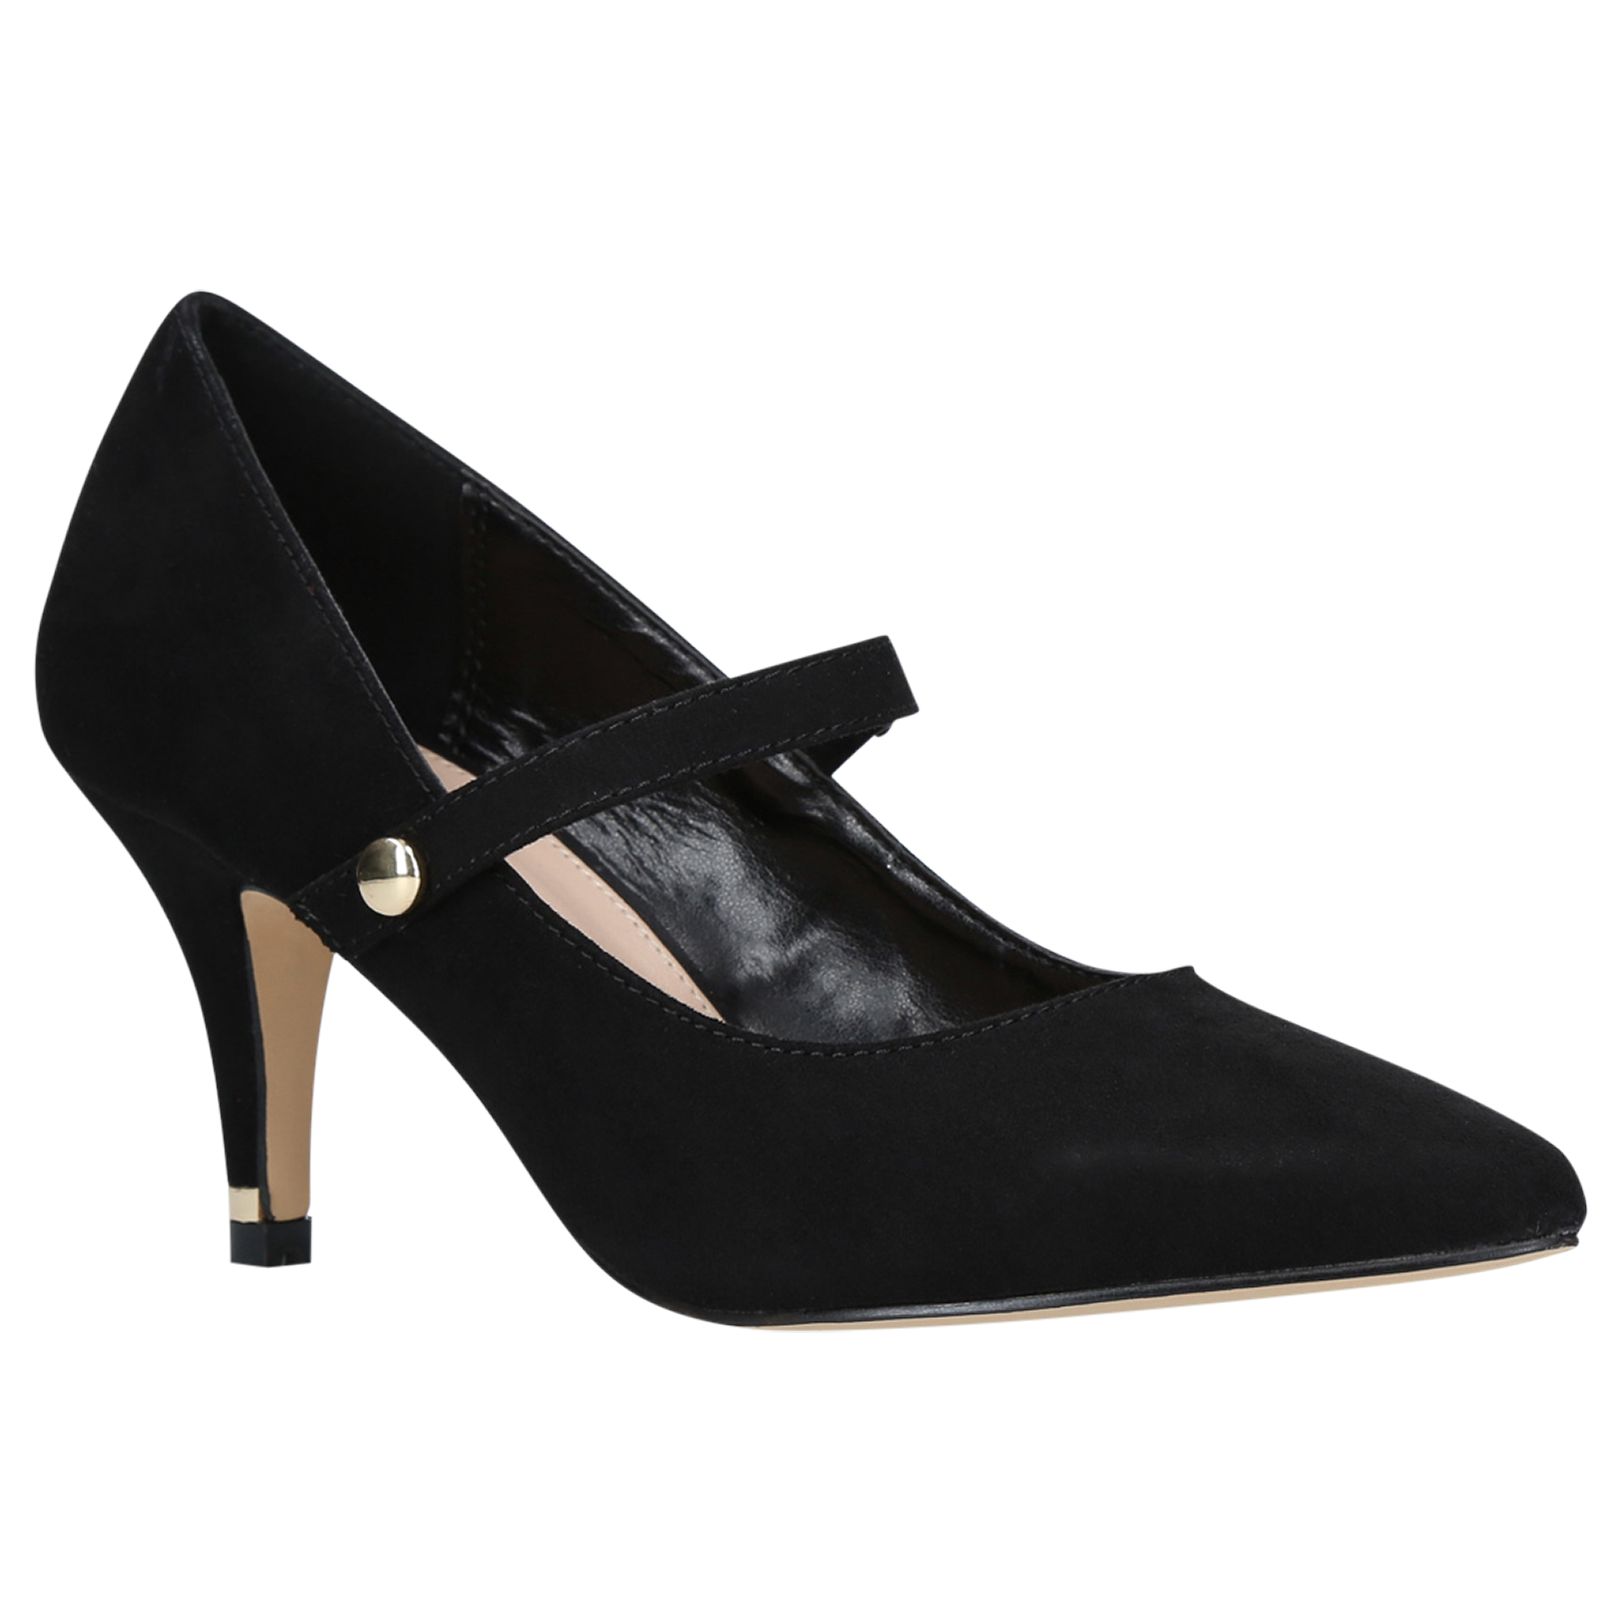 Carvela Kream Court Shoes, Black, 9